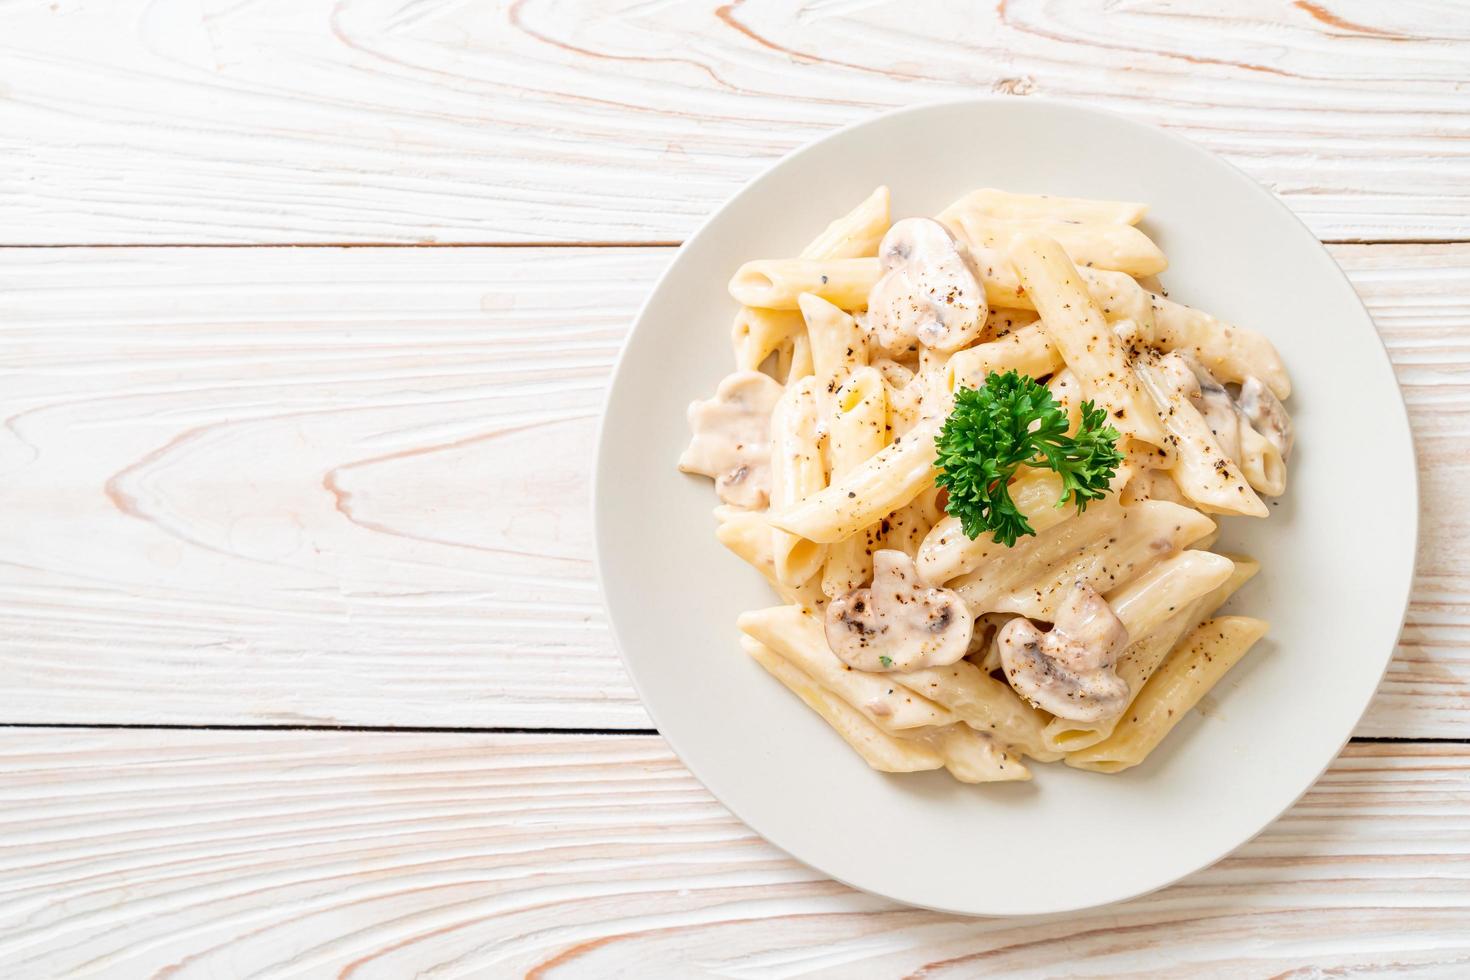 Penne pasta carbonara cream sauce with mushroom - Italian food style photo